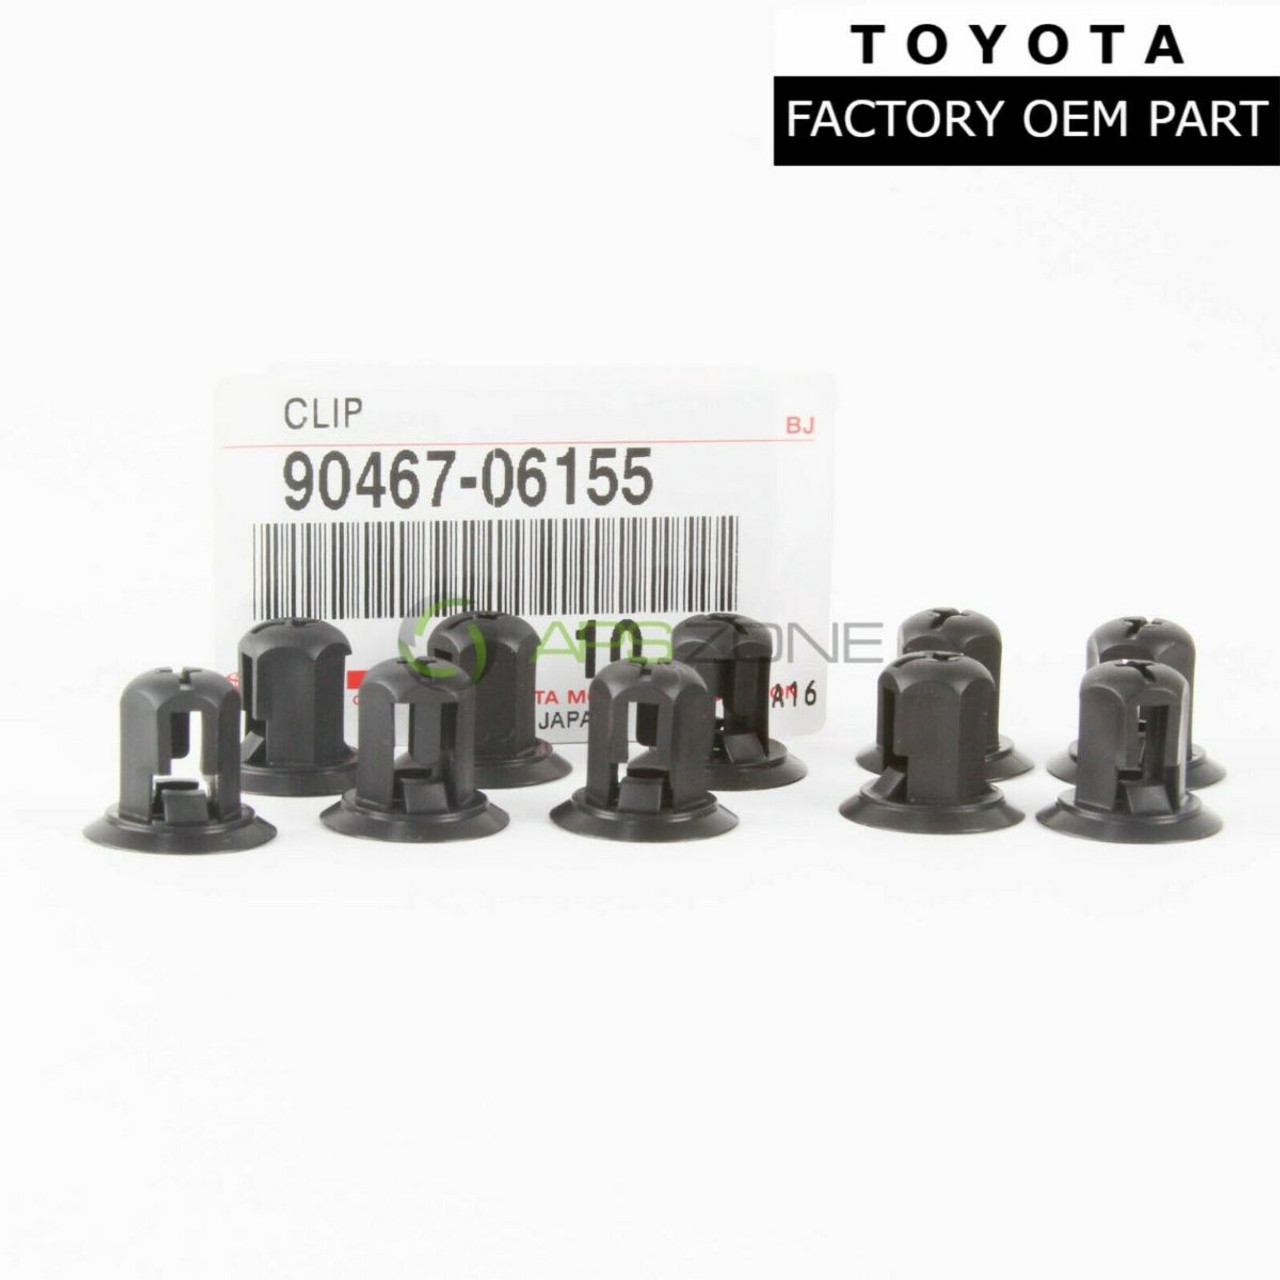 Toyota Tacoma 4Runner Lexus LX570 LS430 Cowl Insulator Clips Set of 10 Genuine OEM 90467-06155 | 9046706155